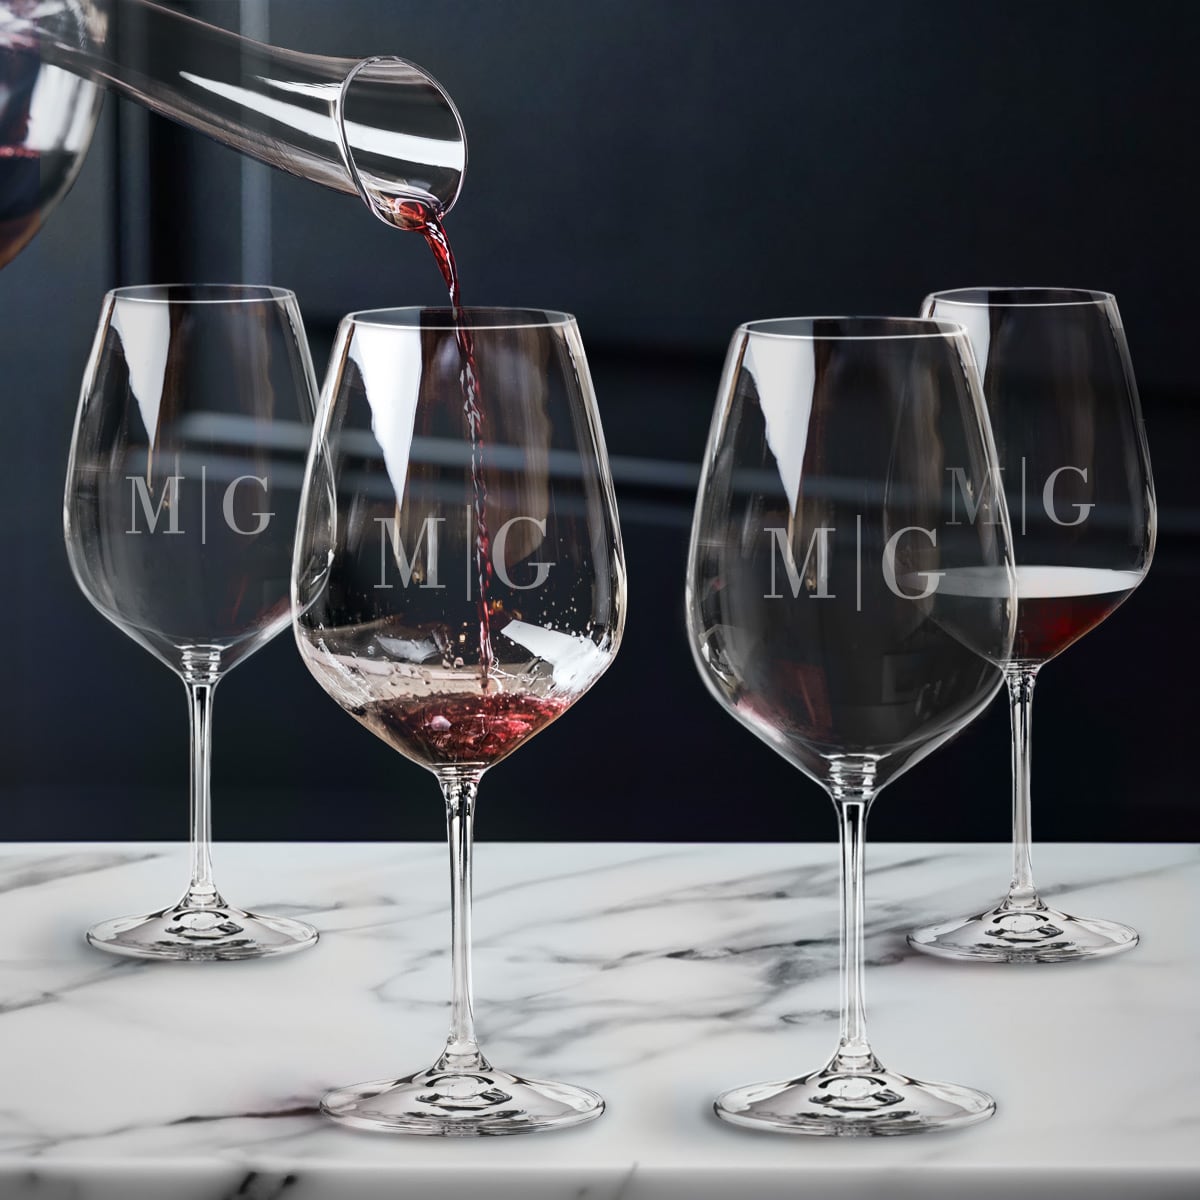 Riedel Wine Glasses, Engraved, Set of 4 - Cabernet/Red Wine Glasses